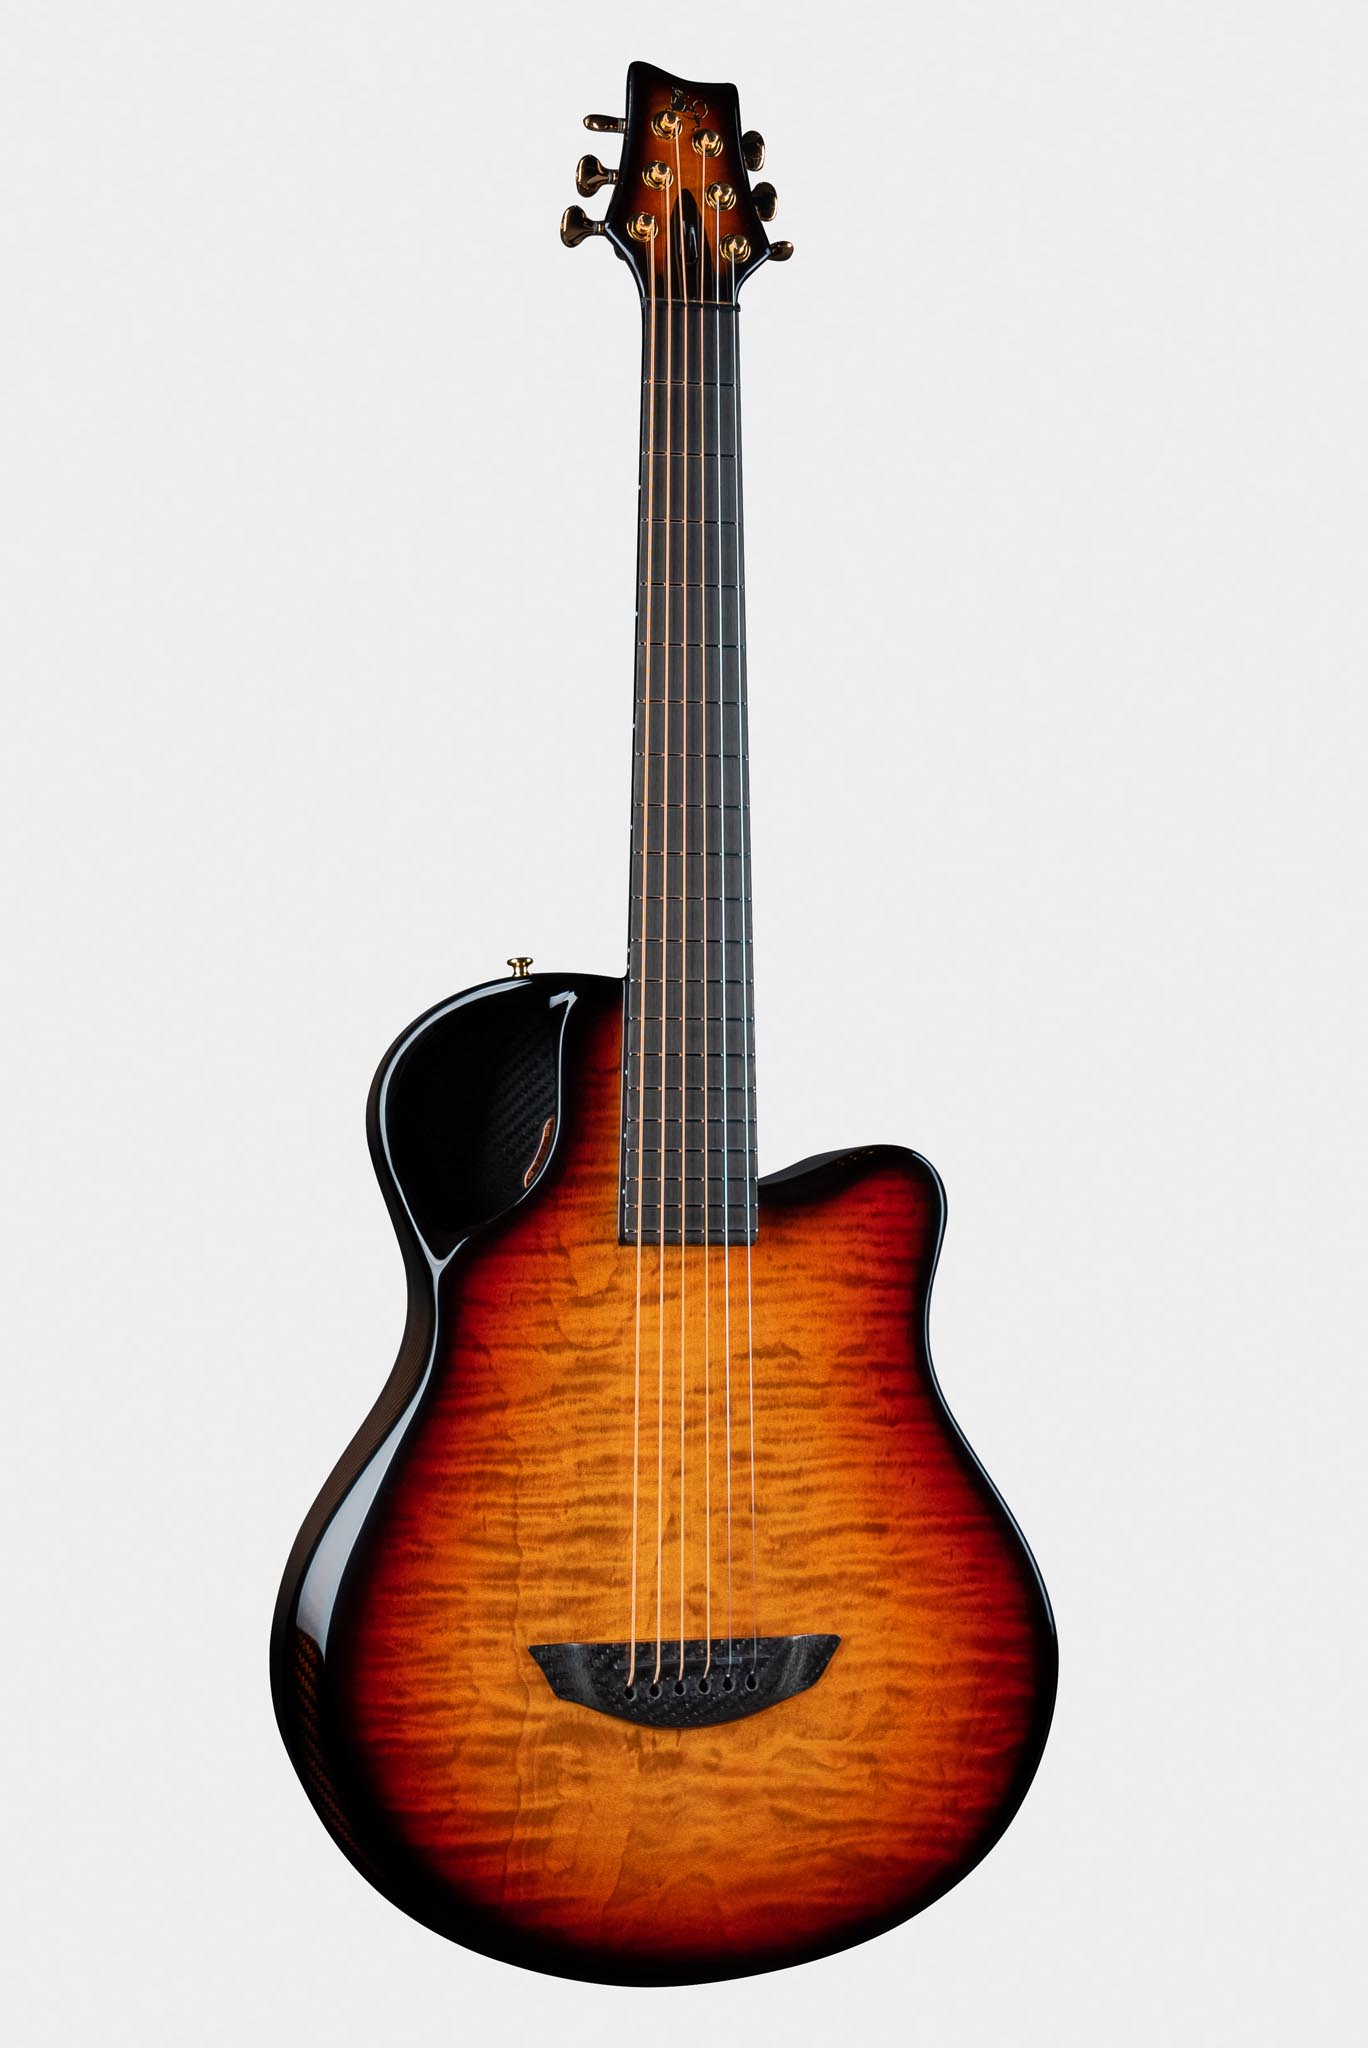 Emerald S X7 Flame Maple in Sunburst, Carbon Fiber Guitar